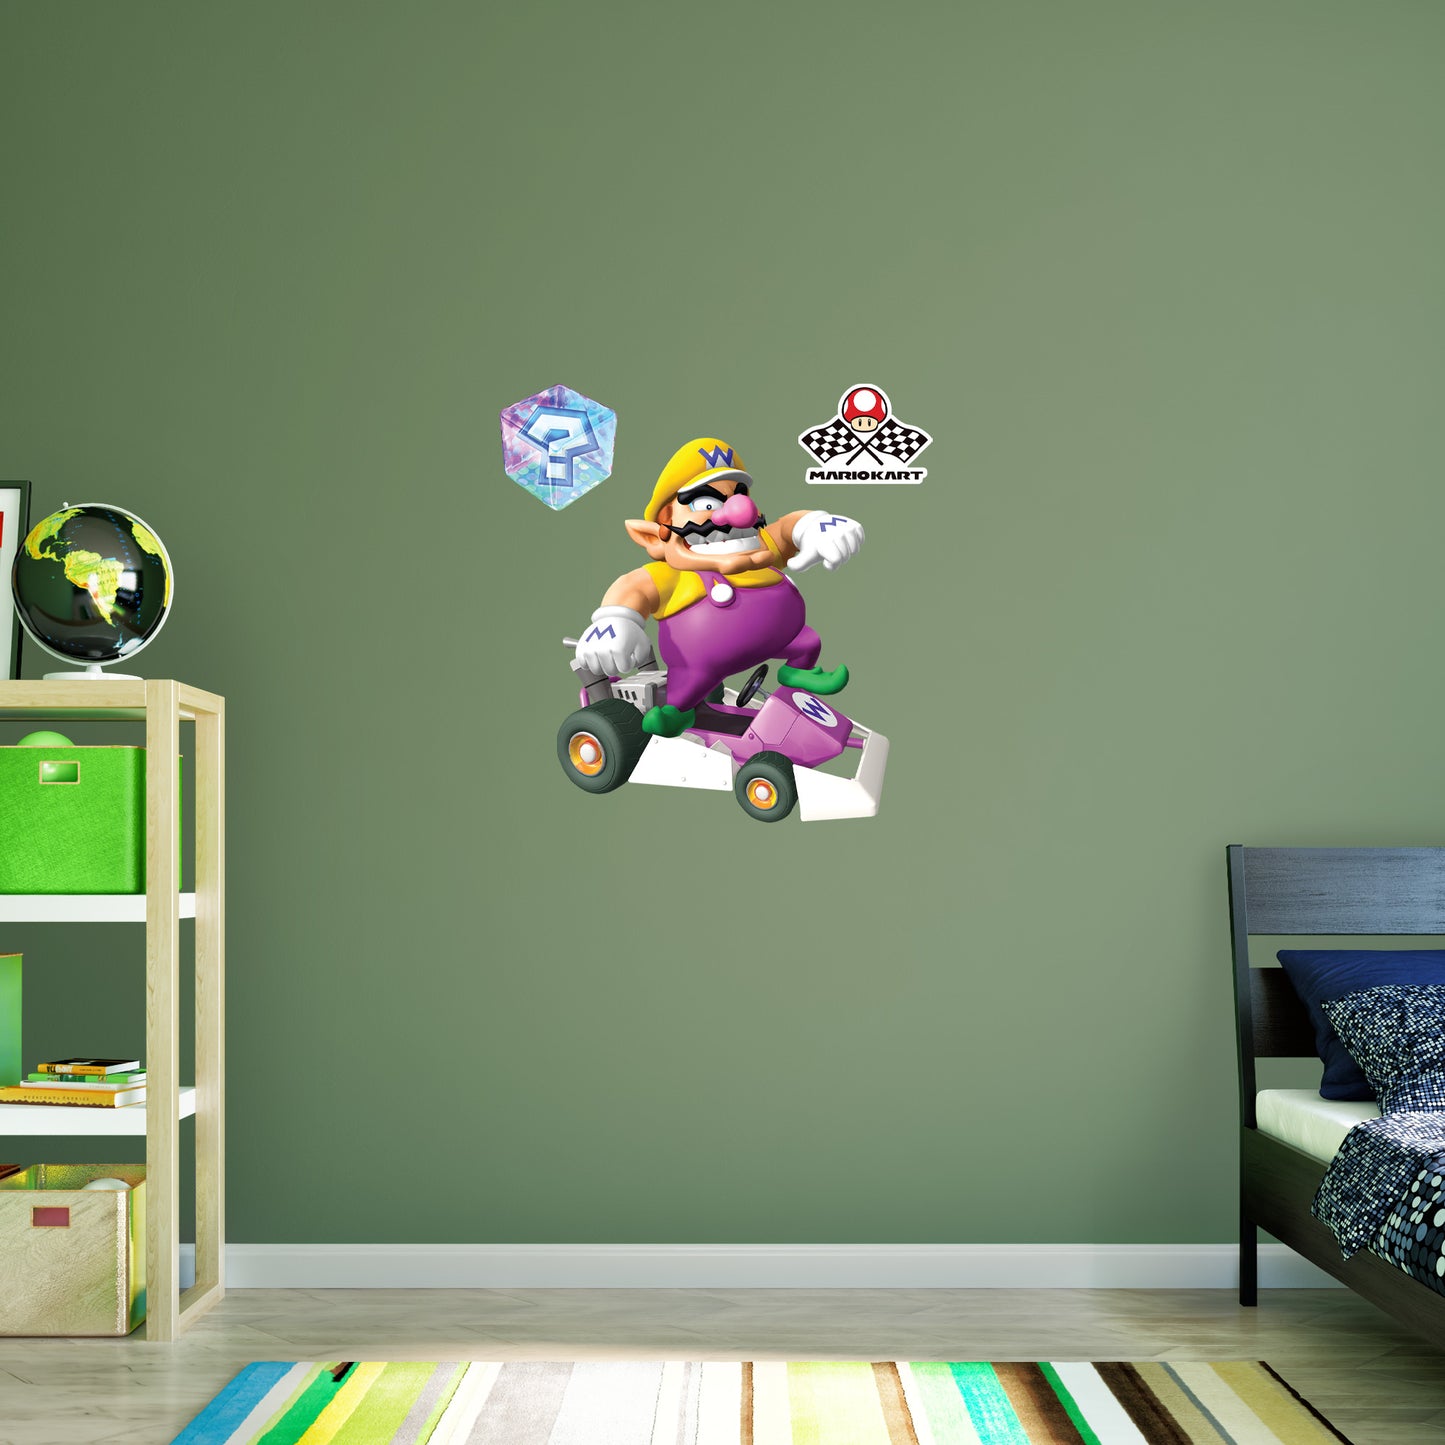 Mario Kart: Wario RealBig        - Officially Licensed Nintendo Removable     Adhesive Decal